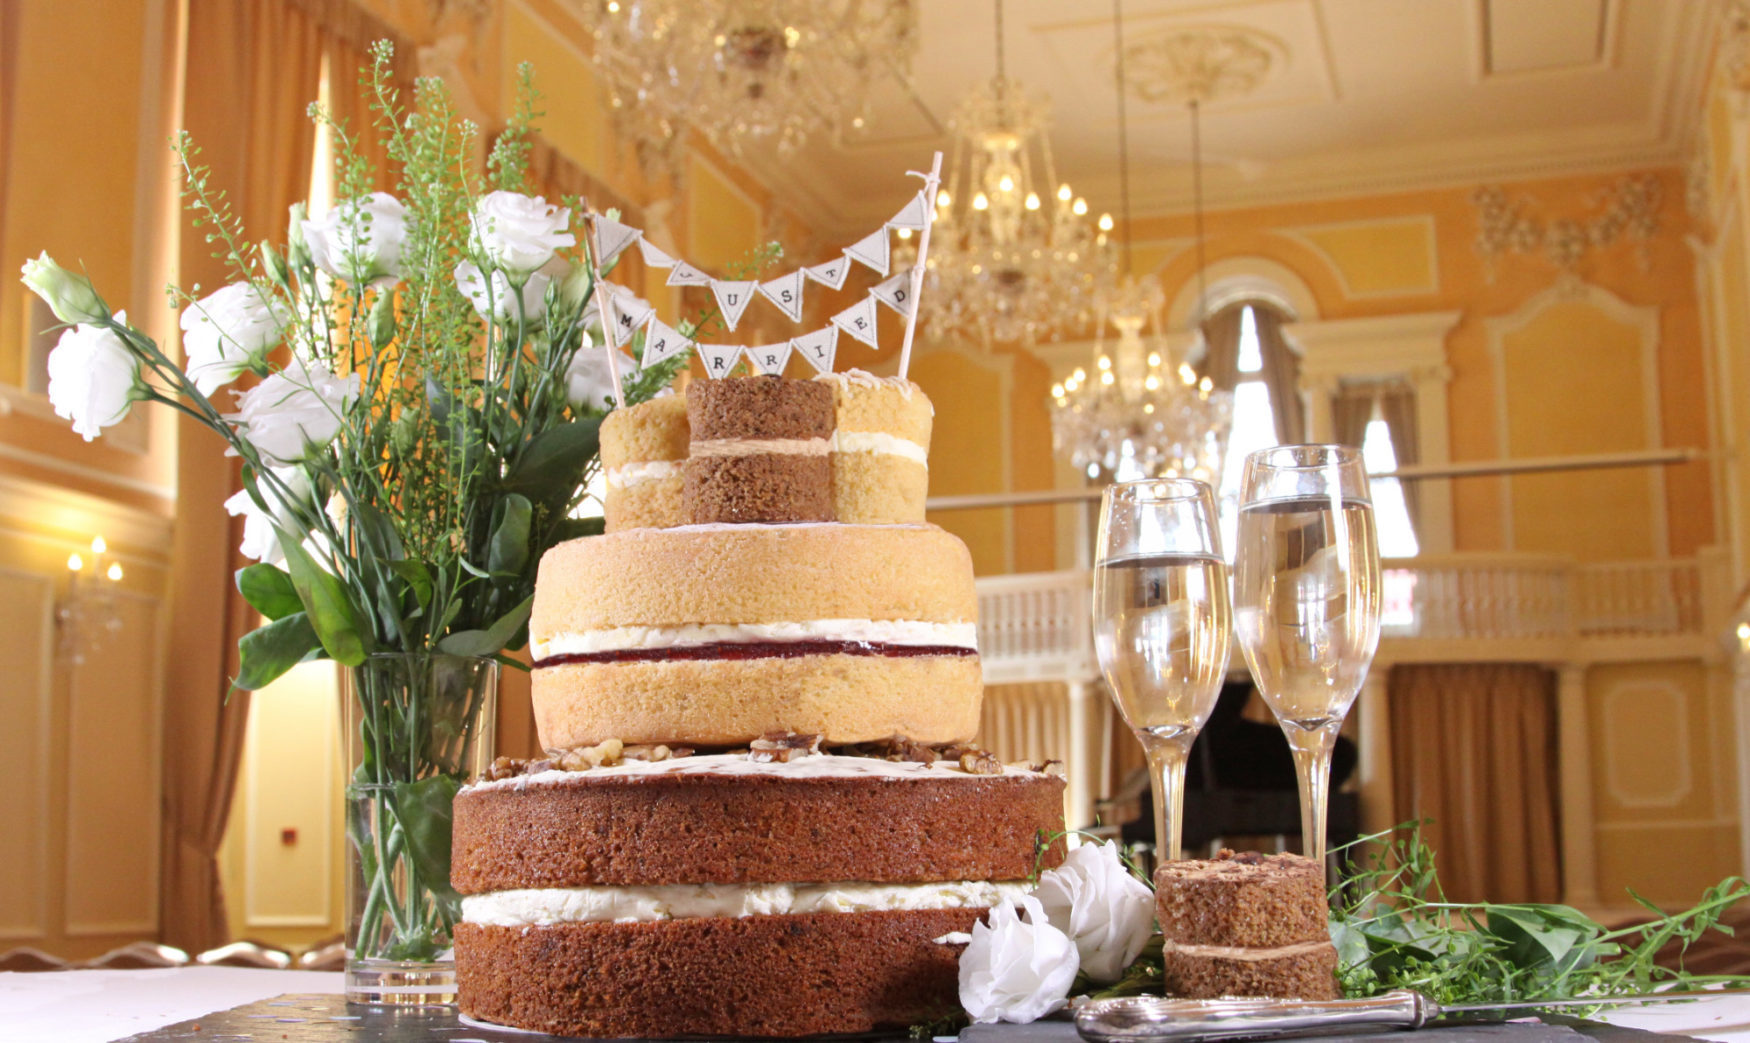 Wedding cake, Sponge Moment, Wedding, Cutting the Cake, Lemon Sponge, Chocolate Sponge